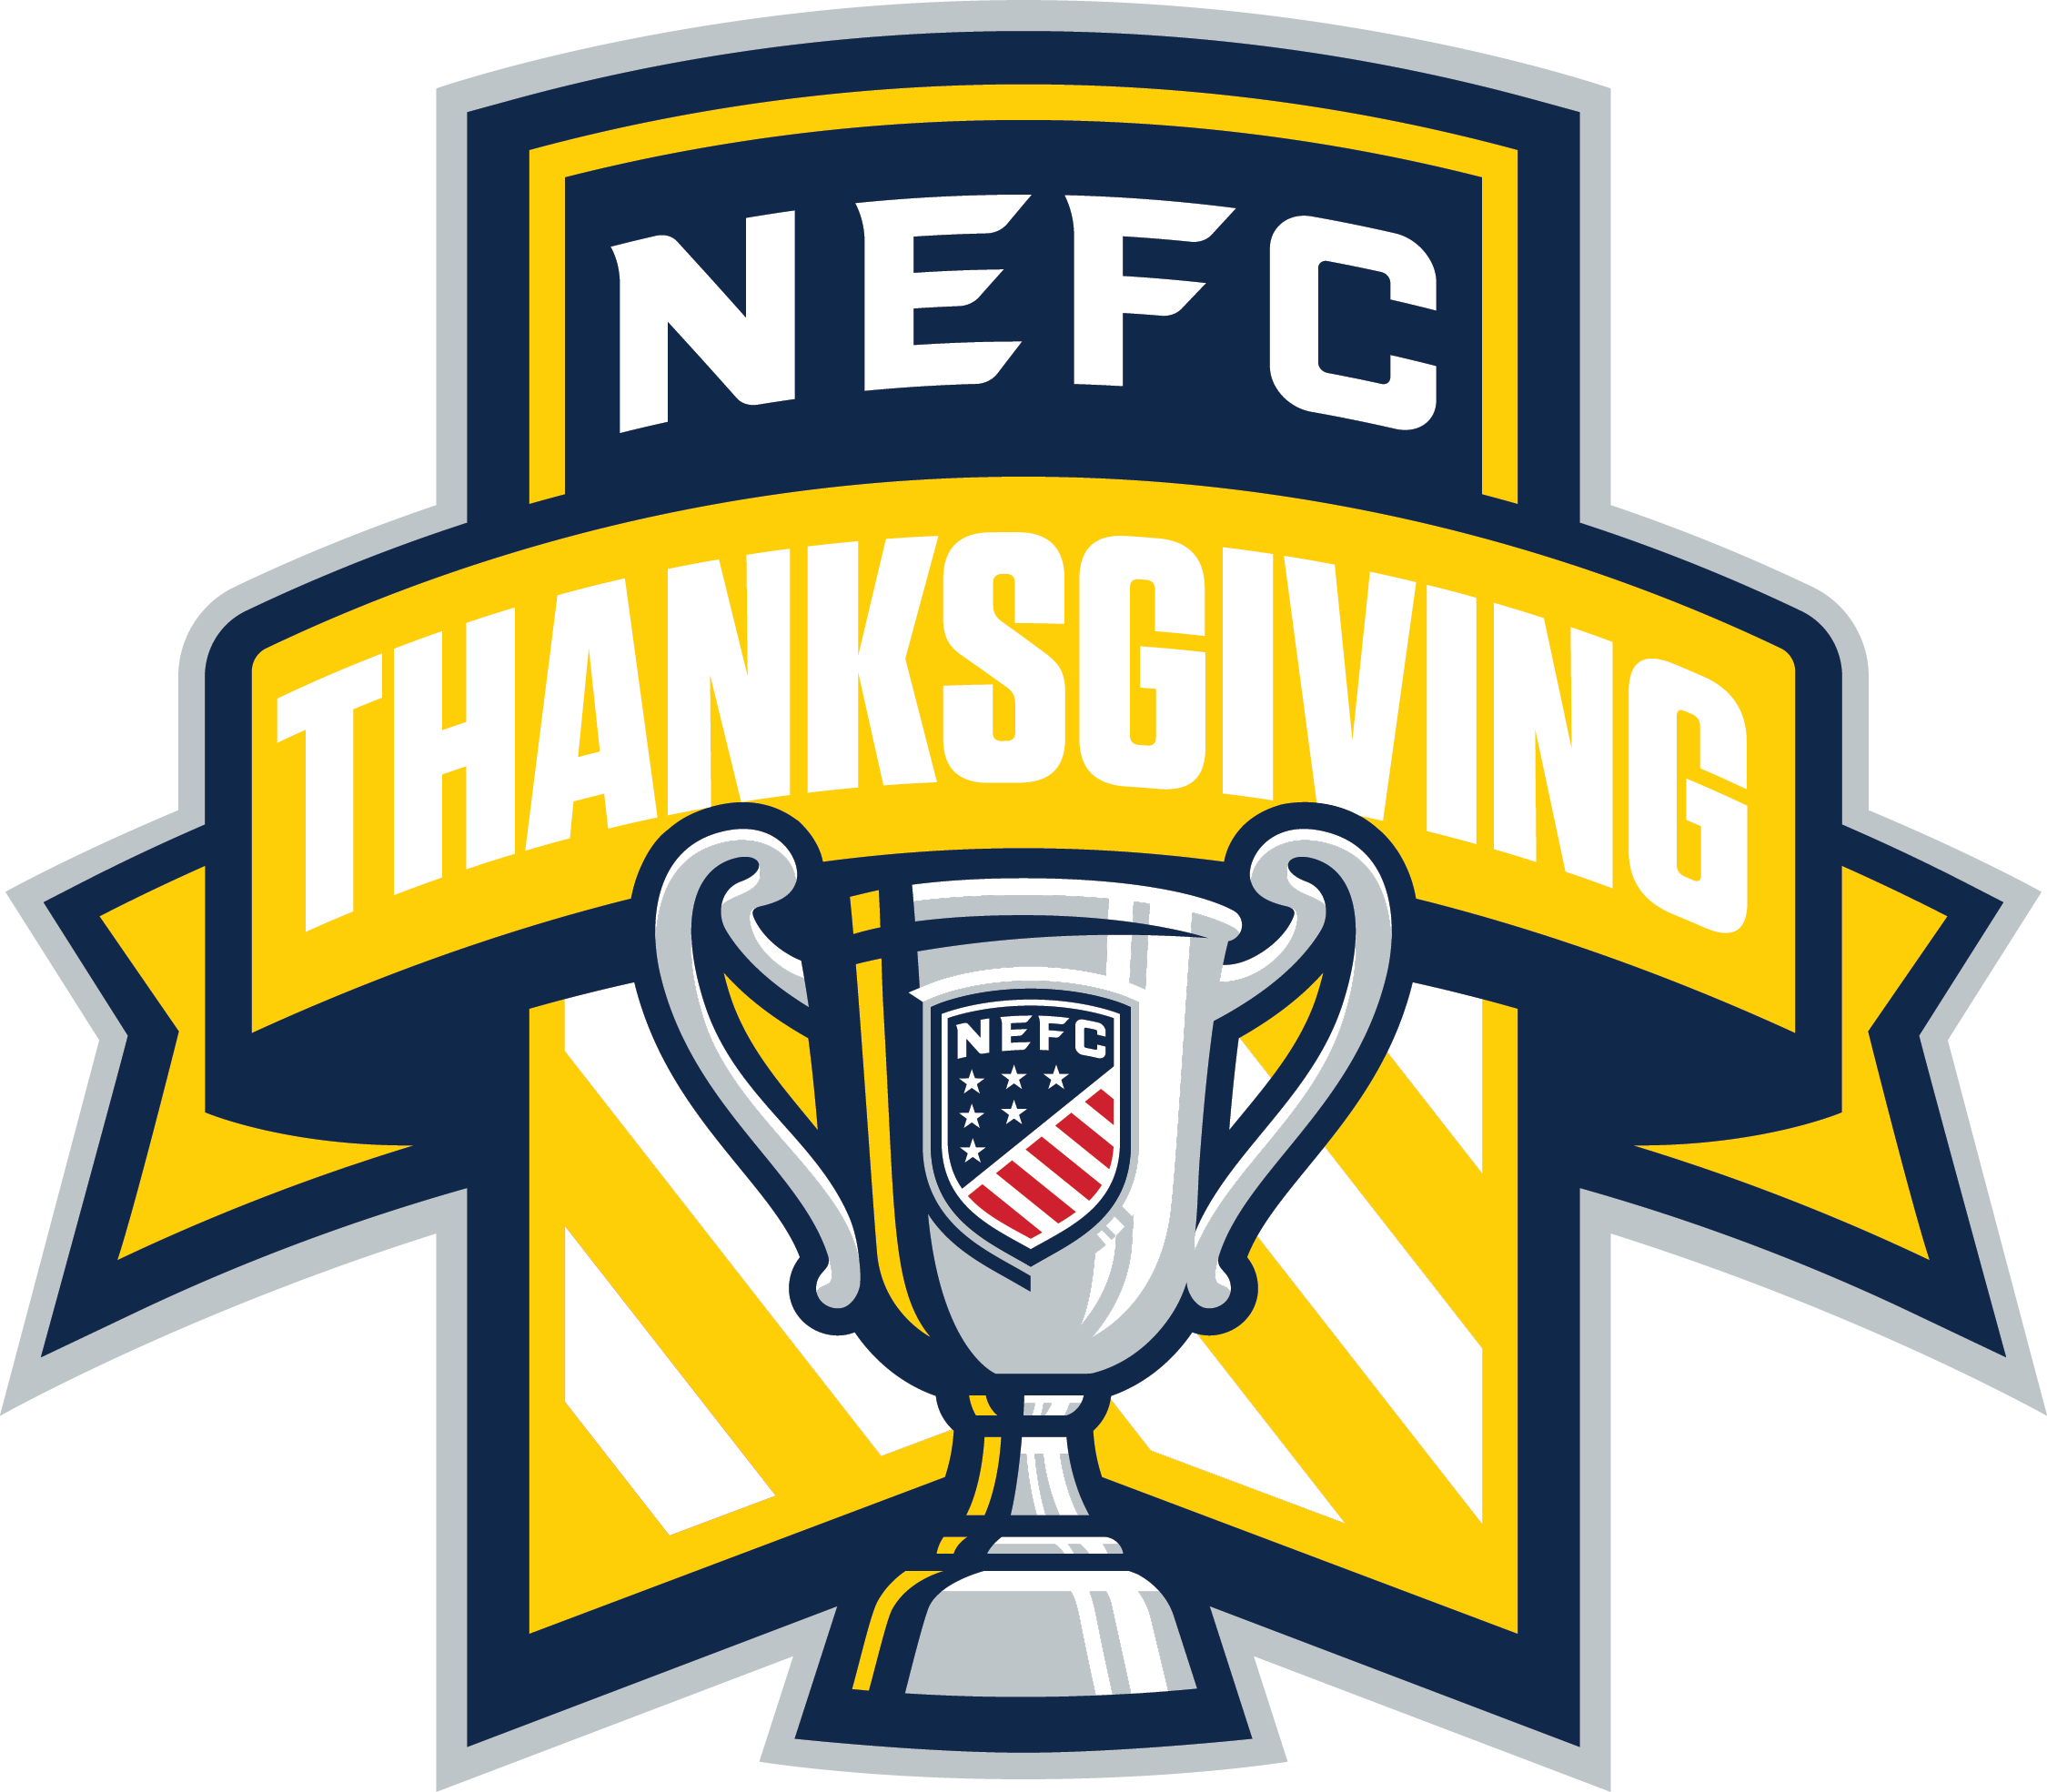 NEFC_Tournaments-Thanksgiving